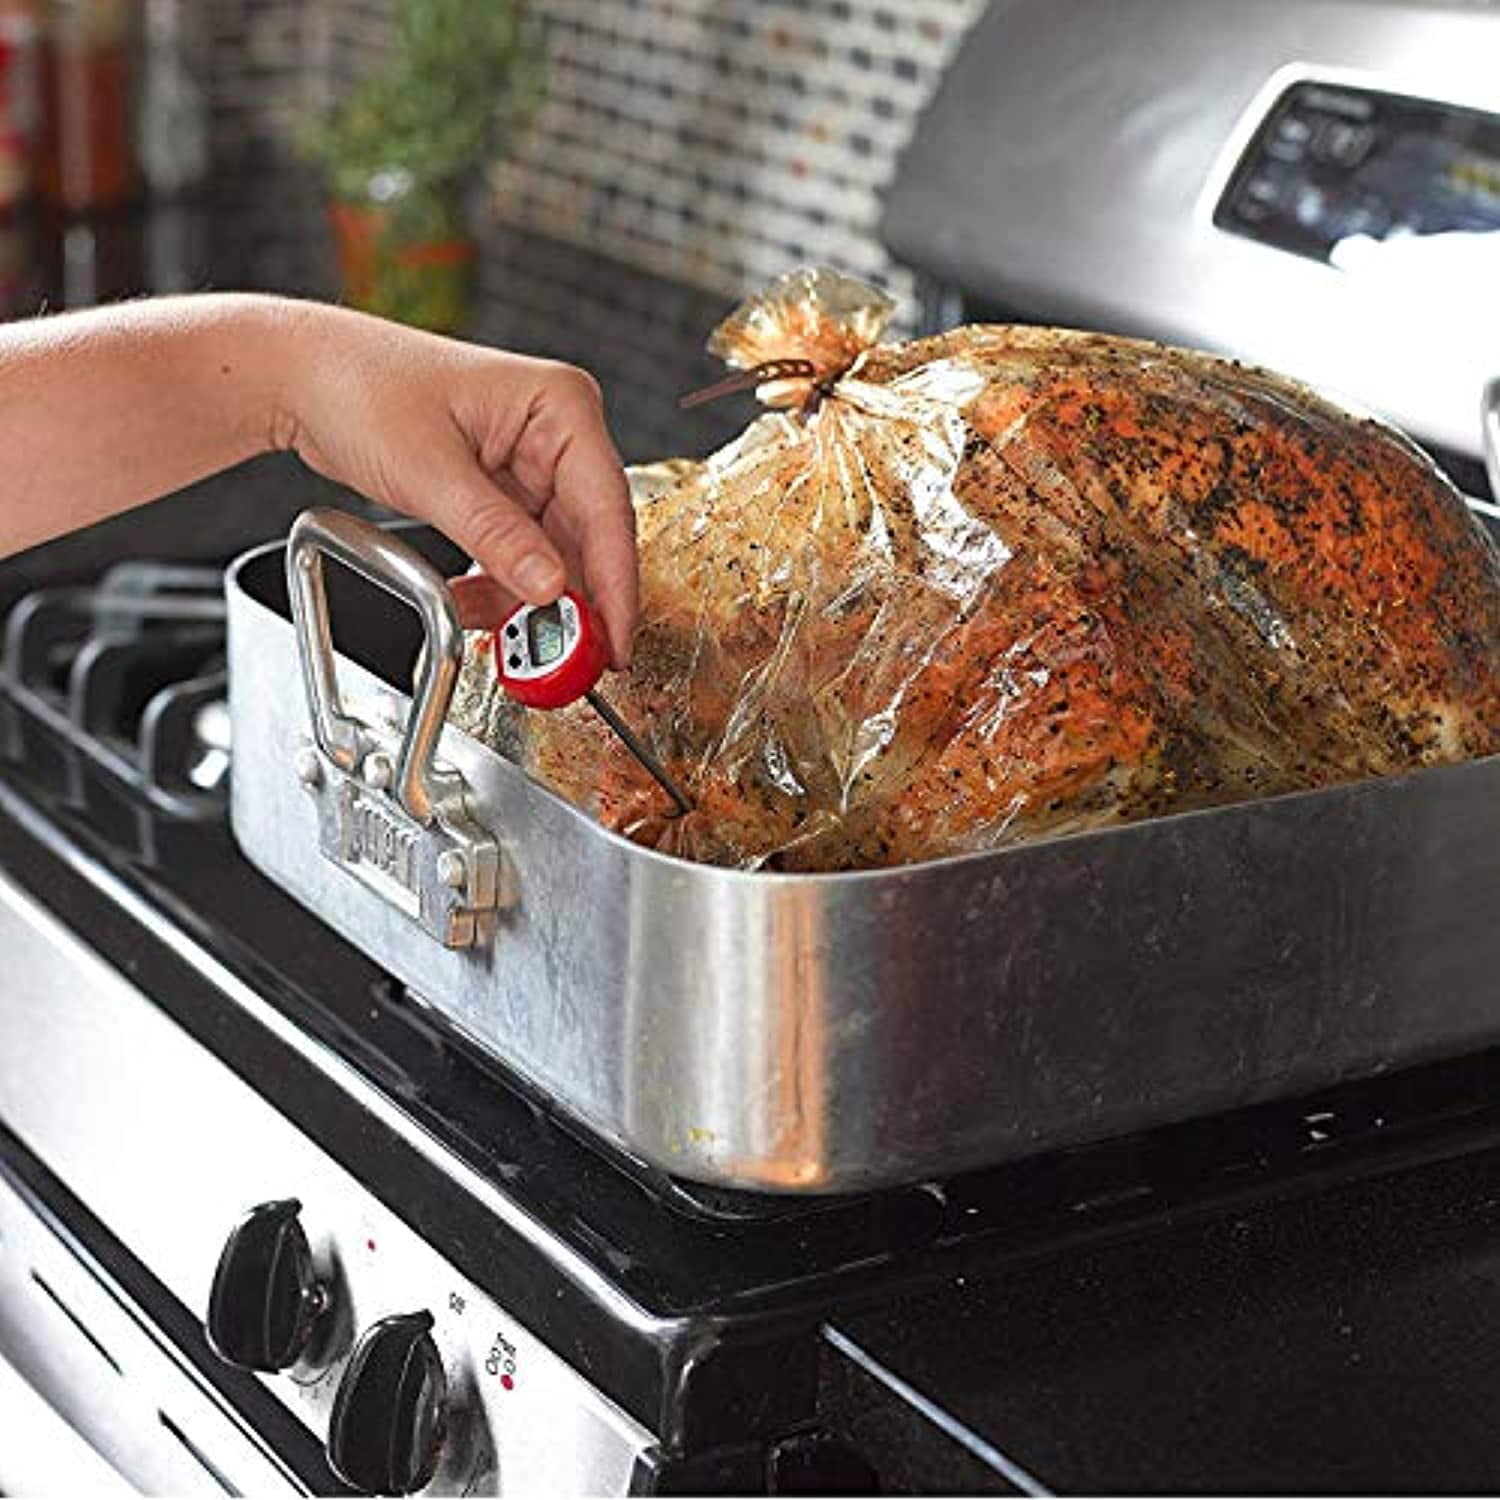 Reynolds Kitchens® Turkey Size Oven Bags, 2 ct - Harris Teeter